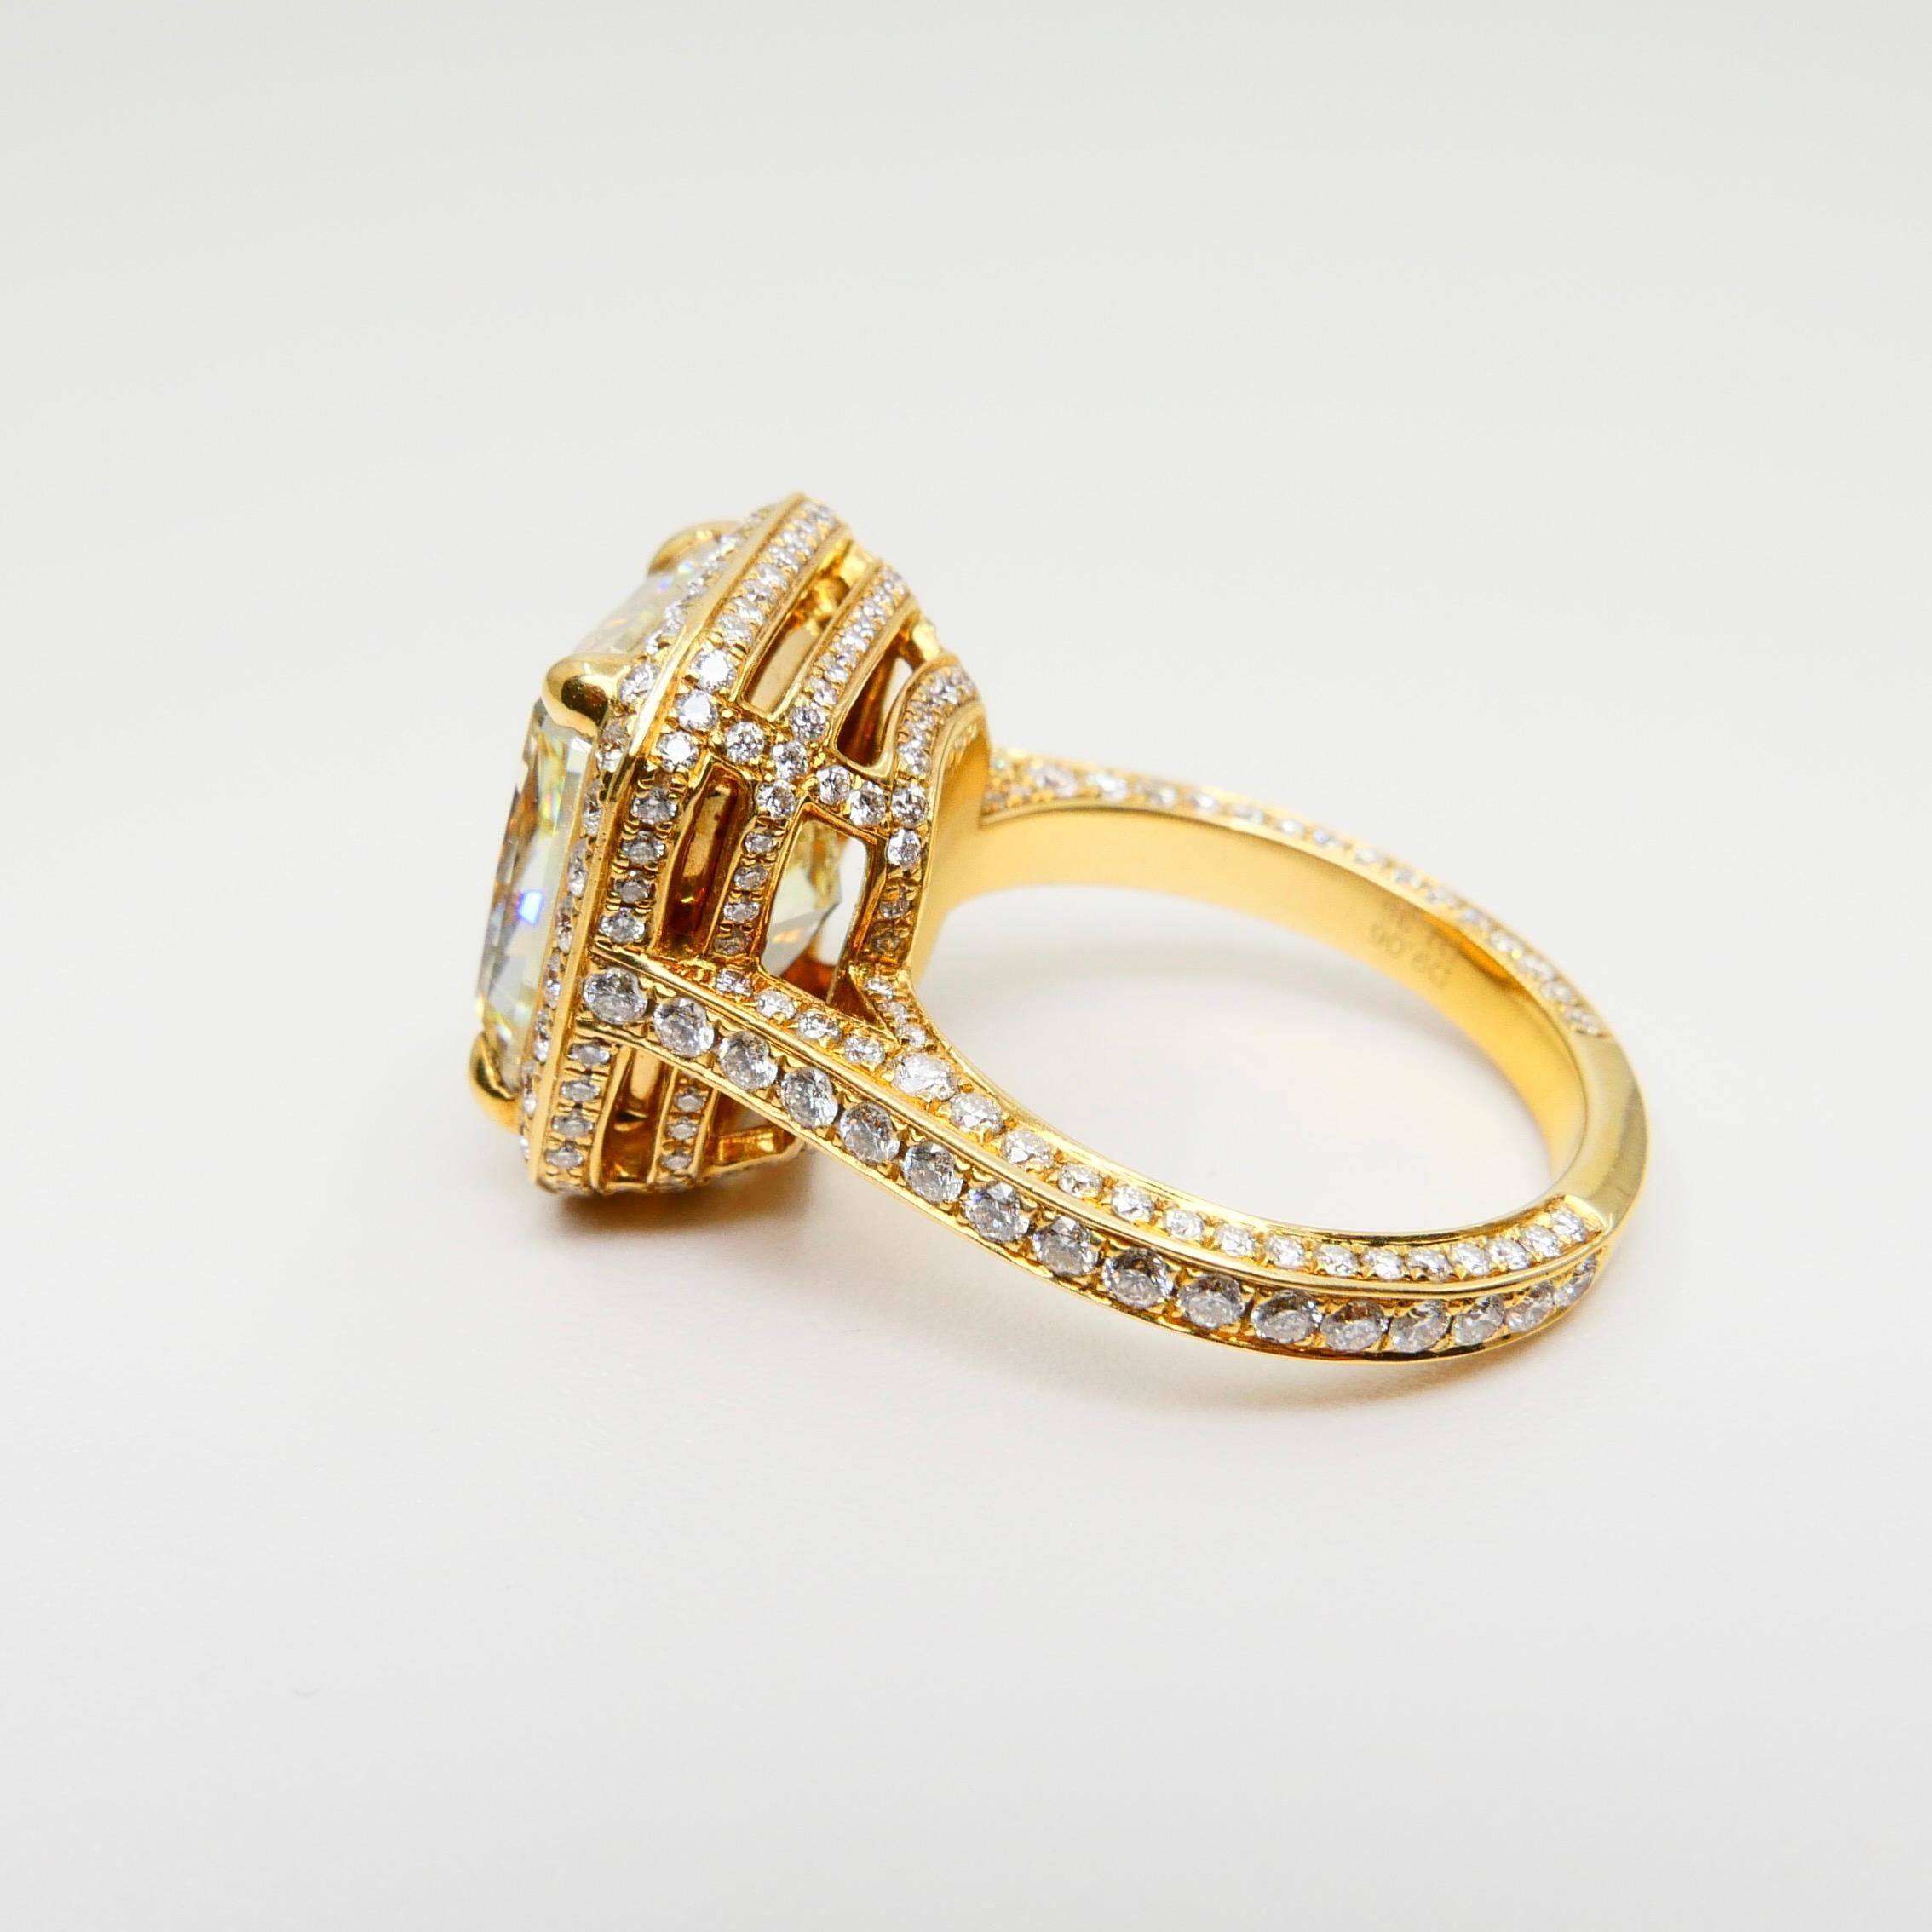 GIA Certified 9 Carat Yellow Diamond Engagement Ring, Oversized & Eye Clean 4